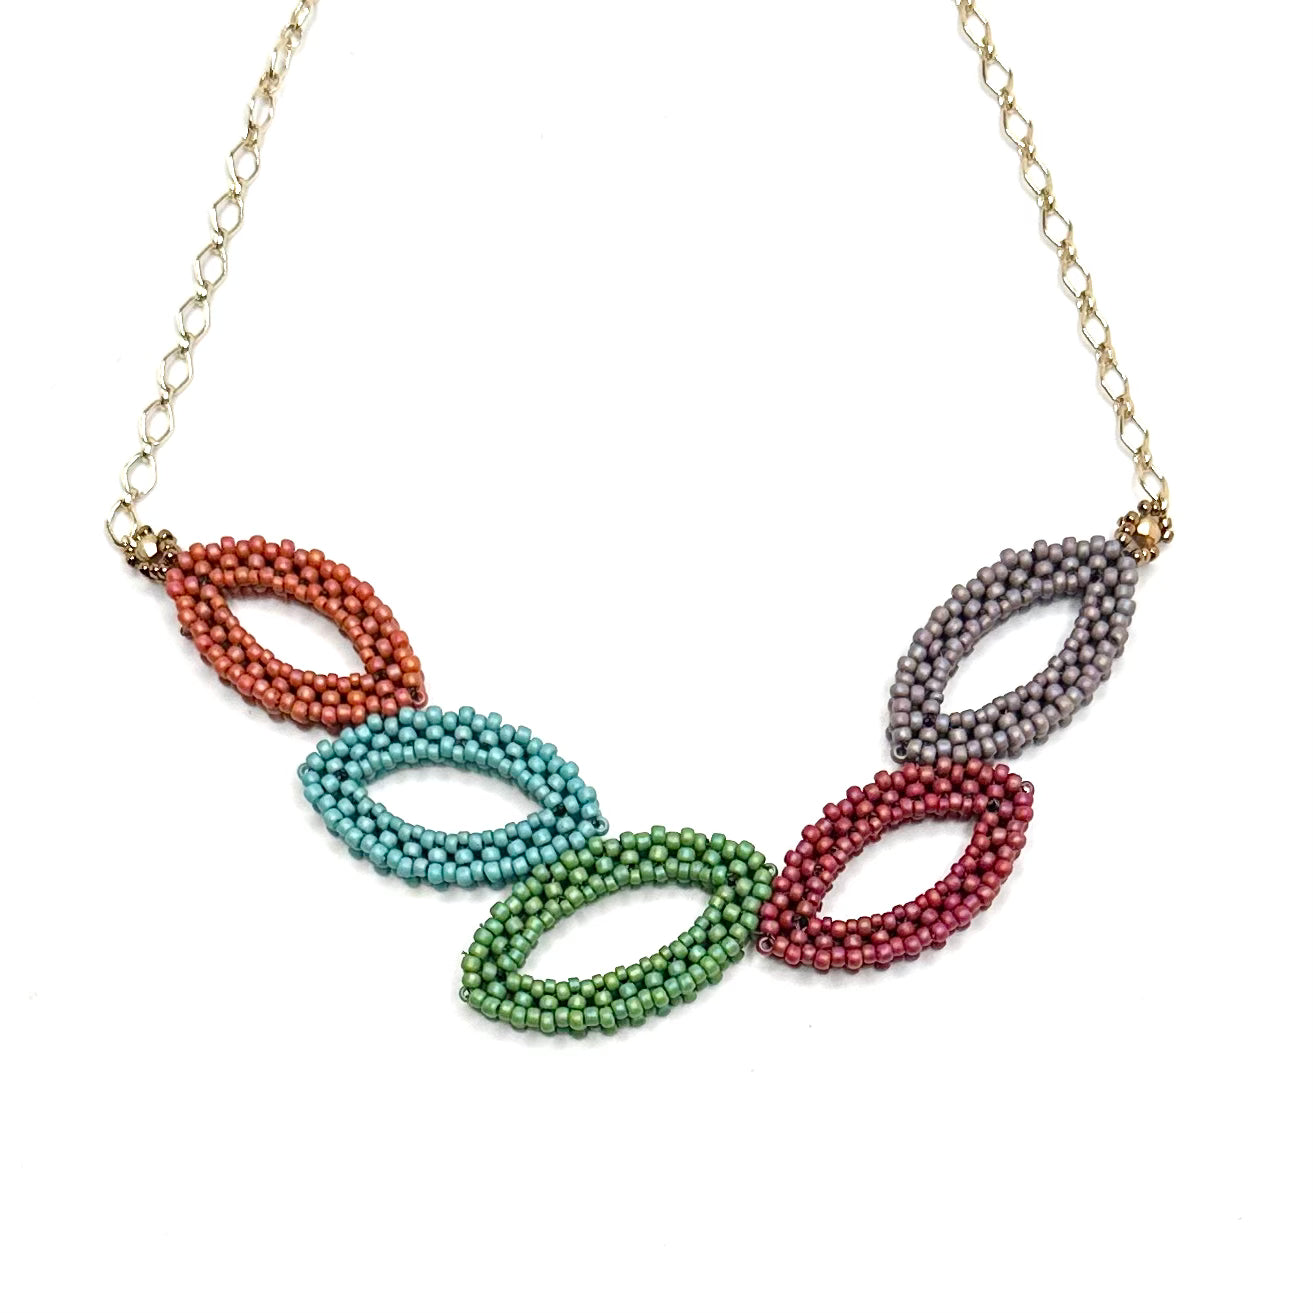 Petite Falling Hojas Necklace - Multi Colored